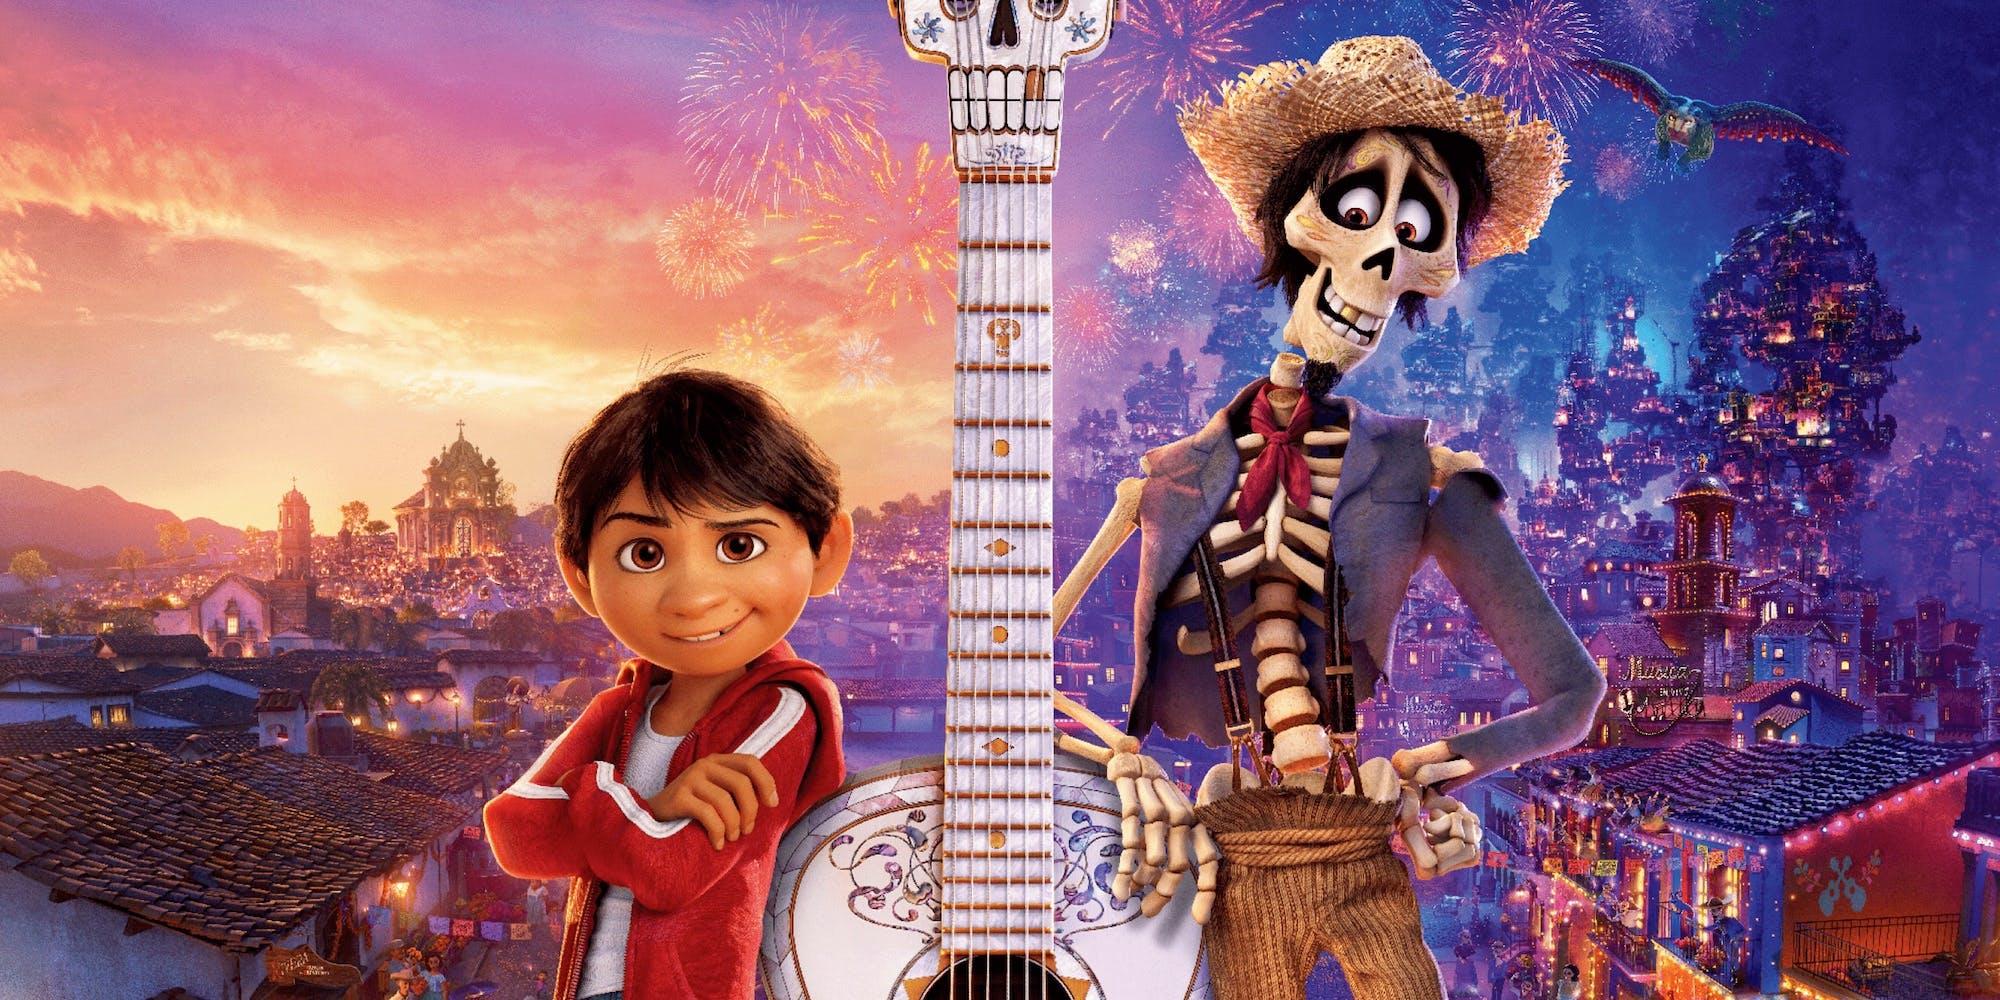 Coco Pixar Movie Wallpaper and Coco Background